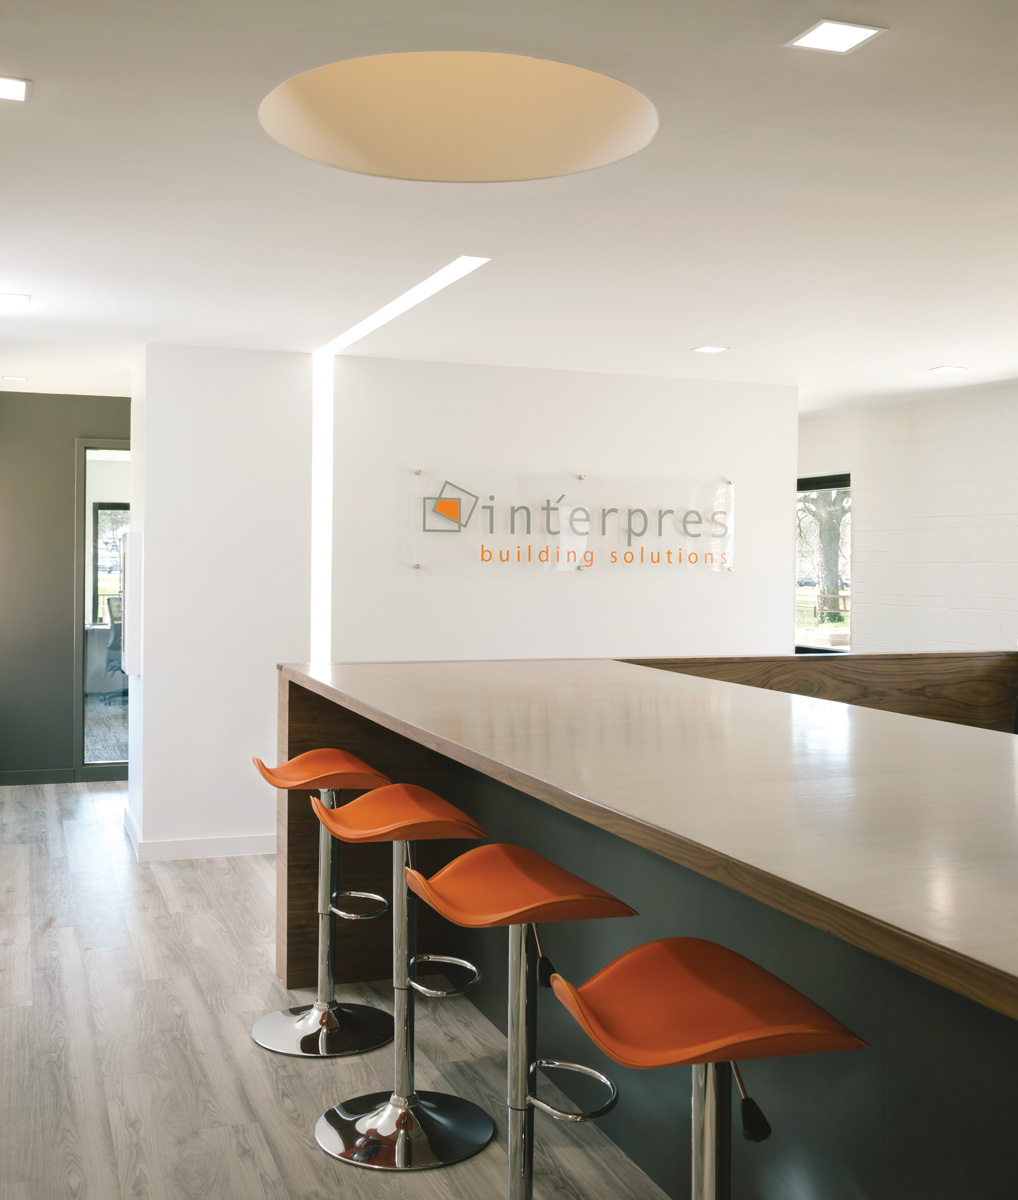 Interpres Building Solutions Headquarters — Common Area